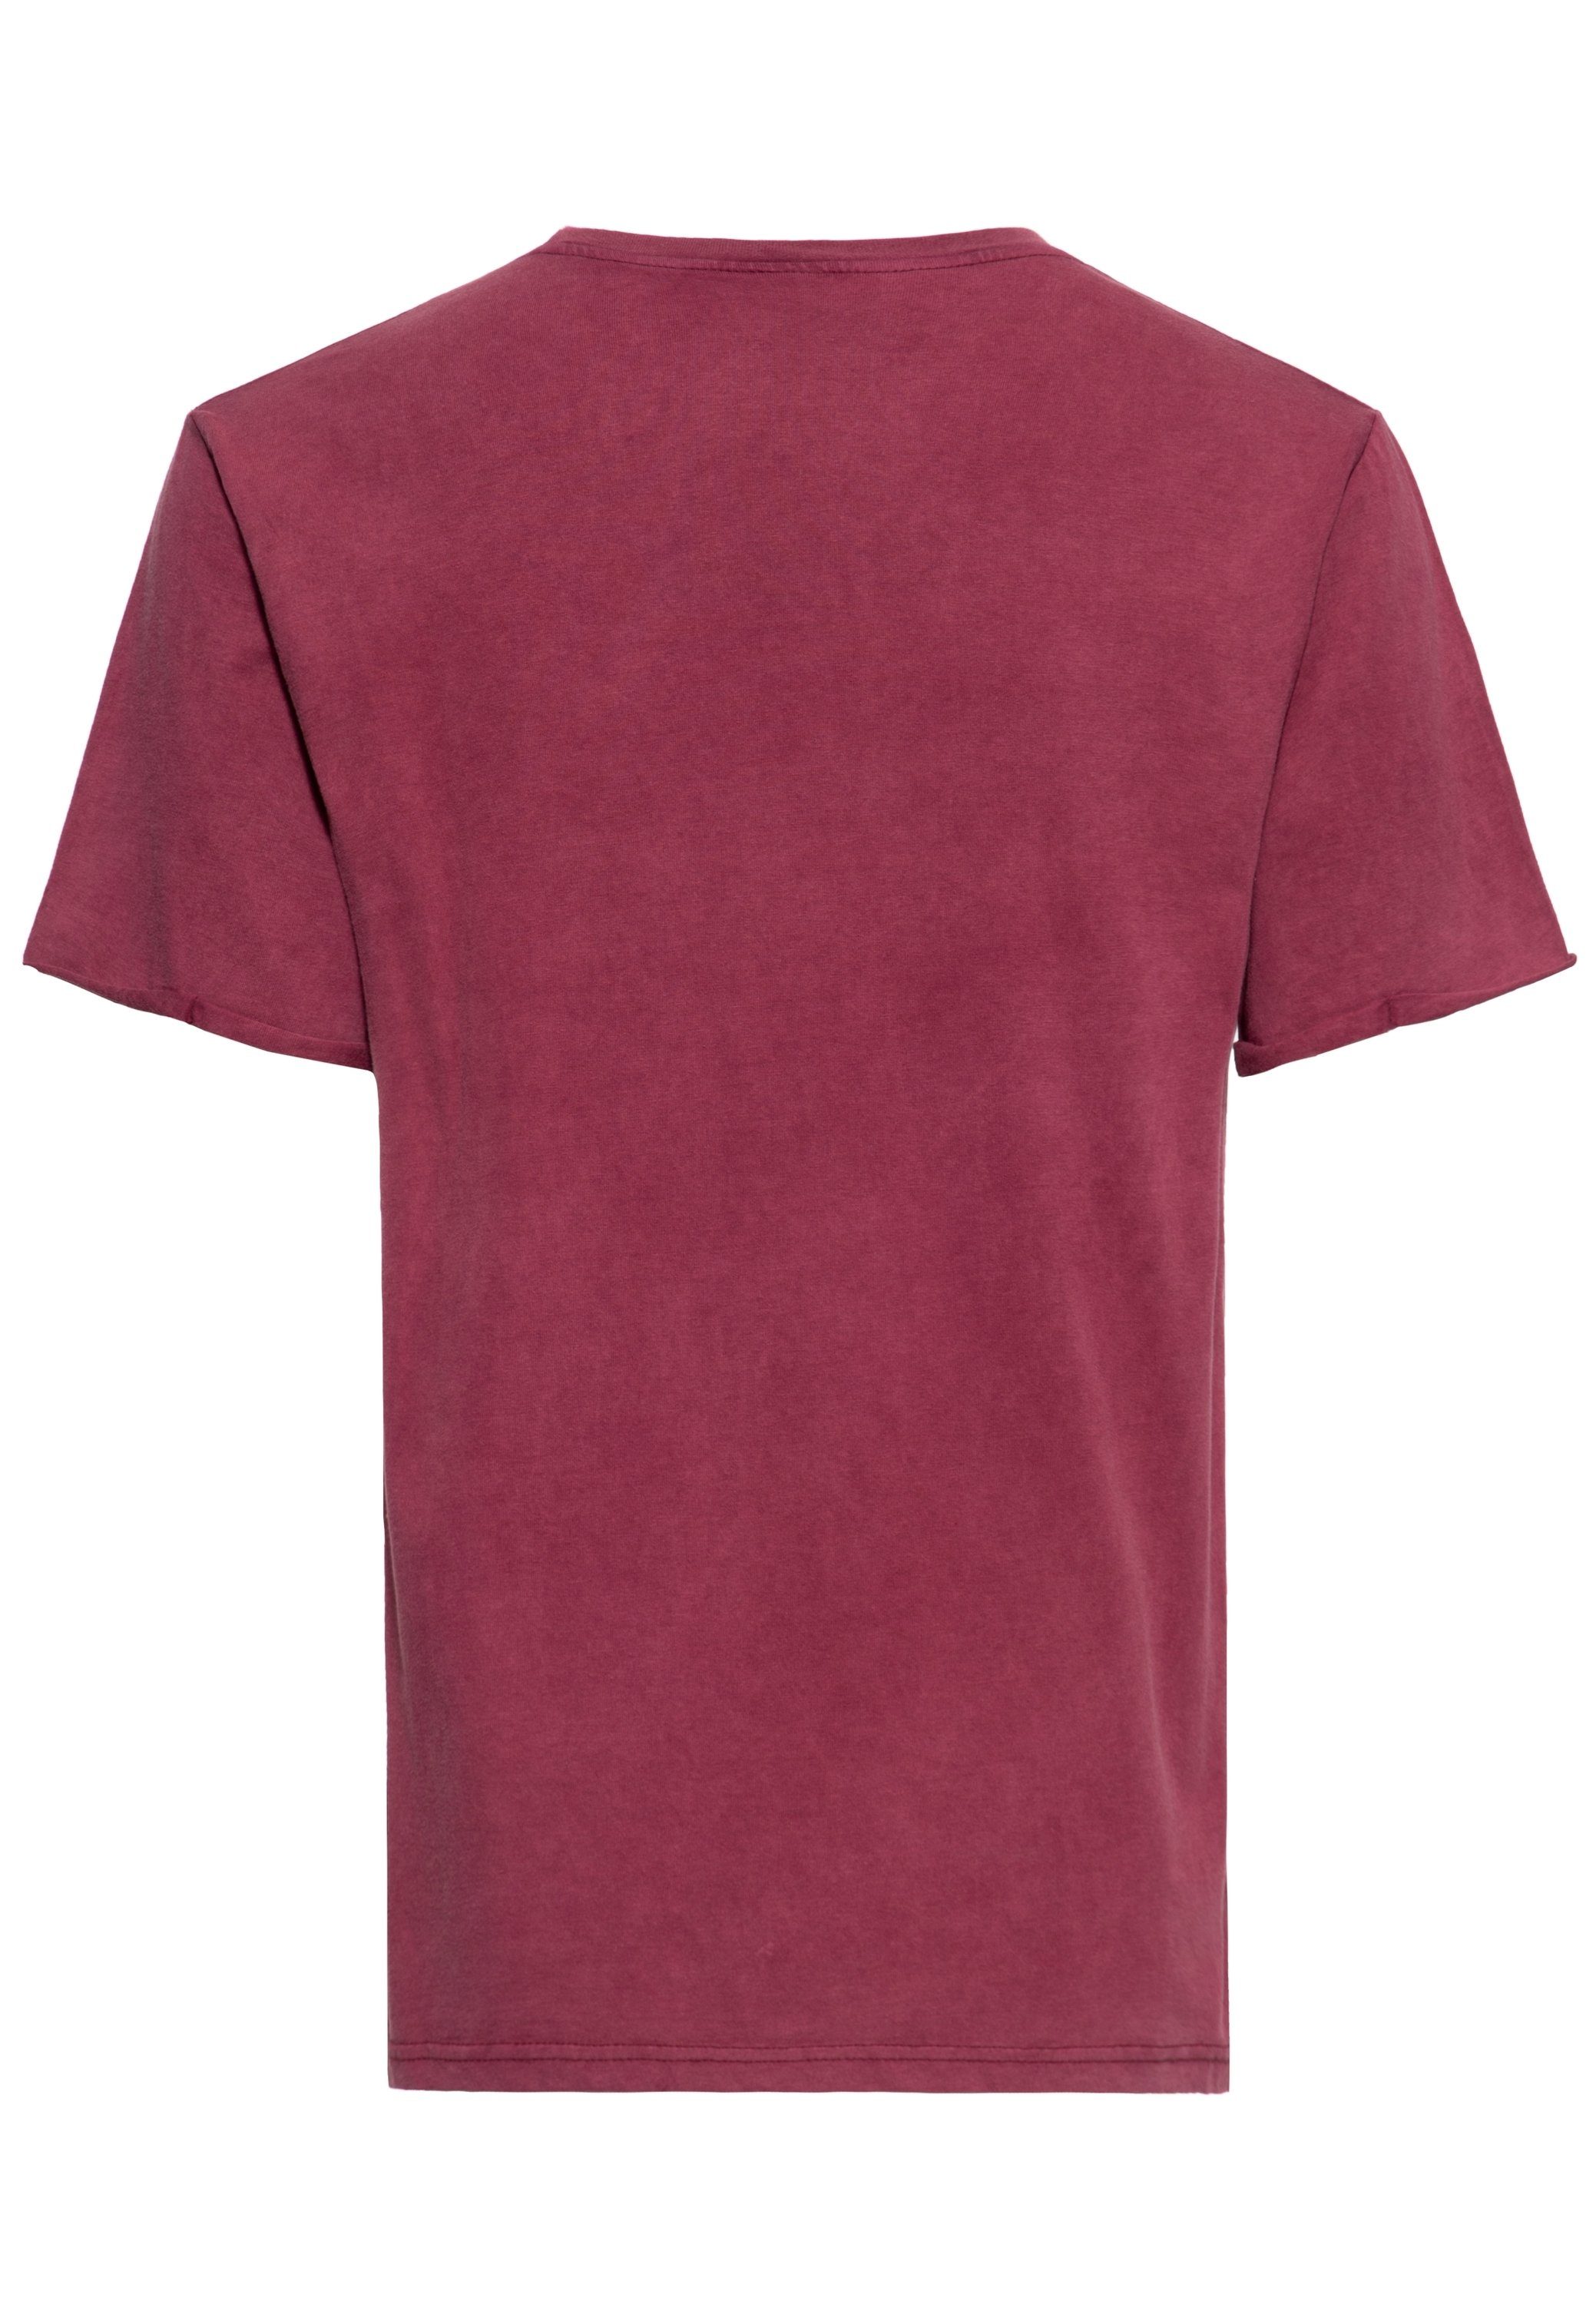 Oil-Washed KingKerosin burgund Greaser Print-Shirt Detroit